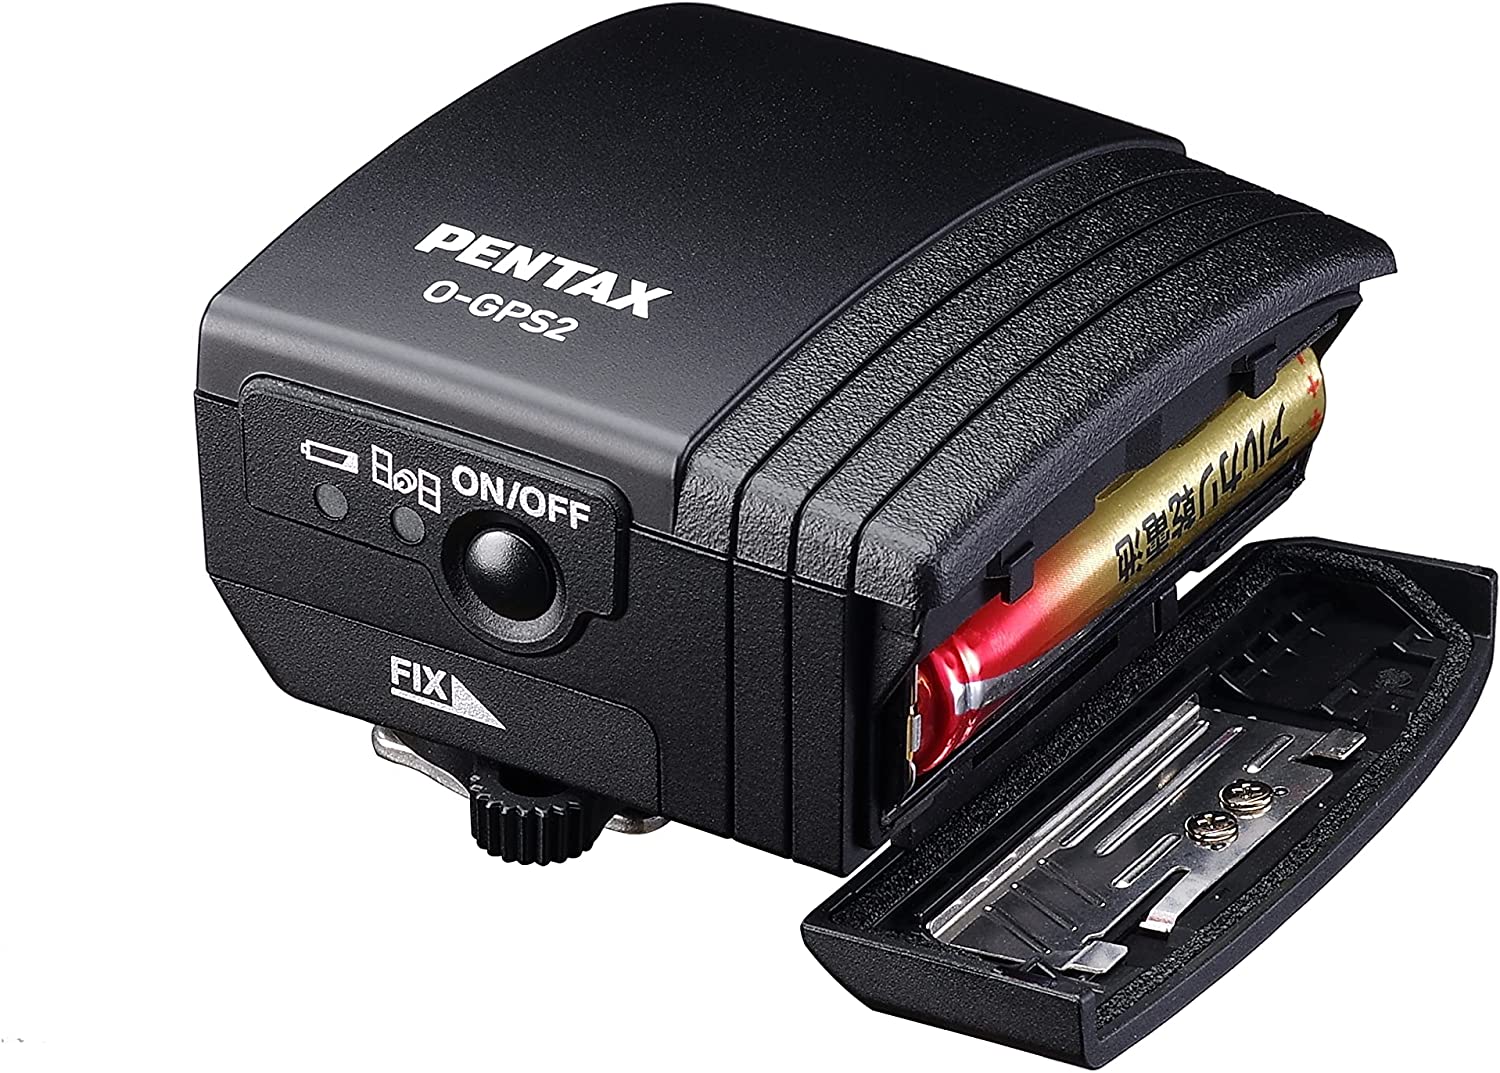 Pentax O-GPS2 Handy GPS Unit